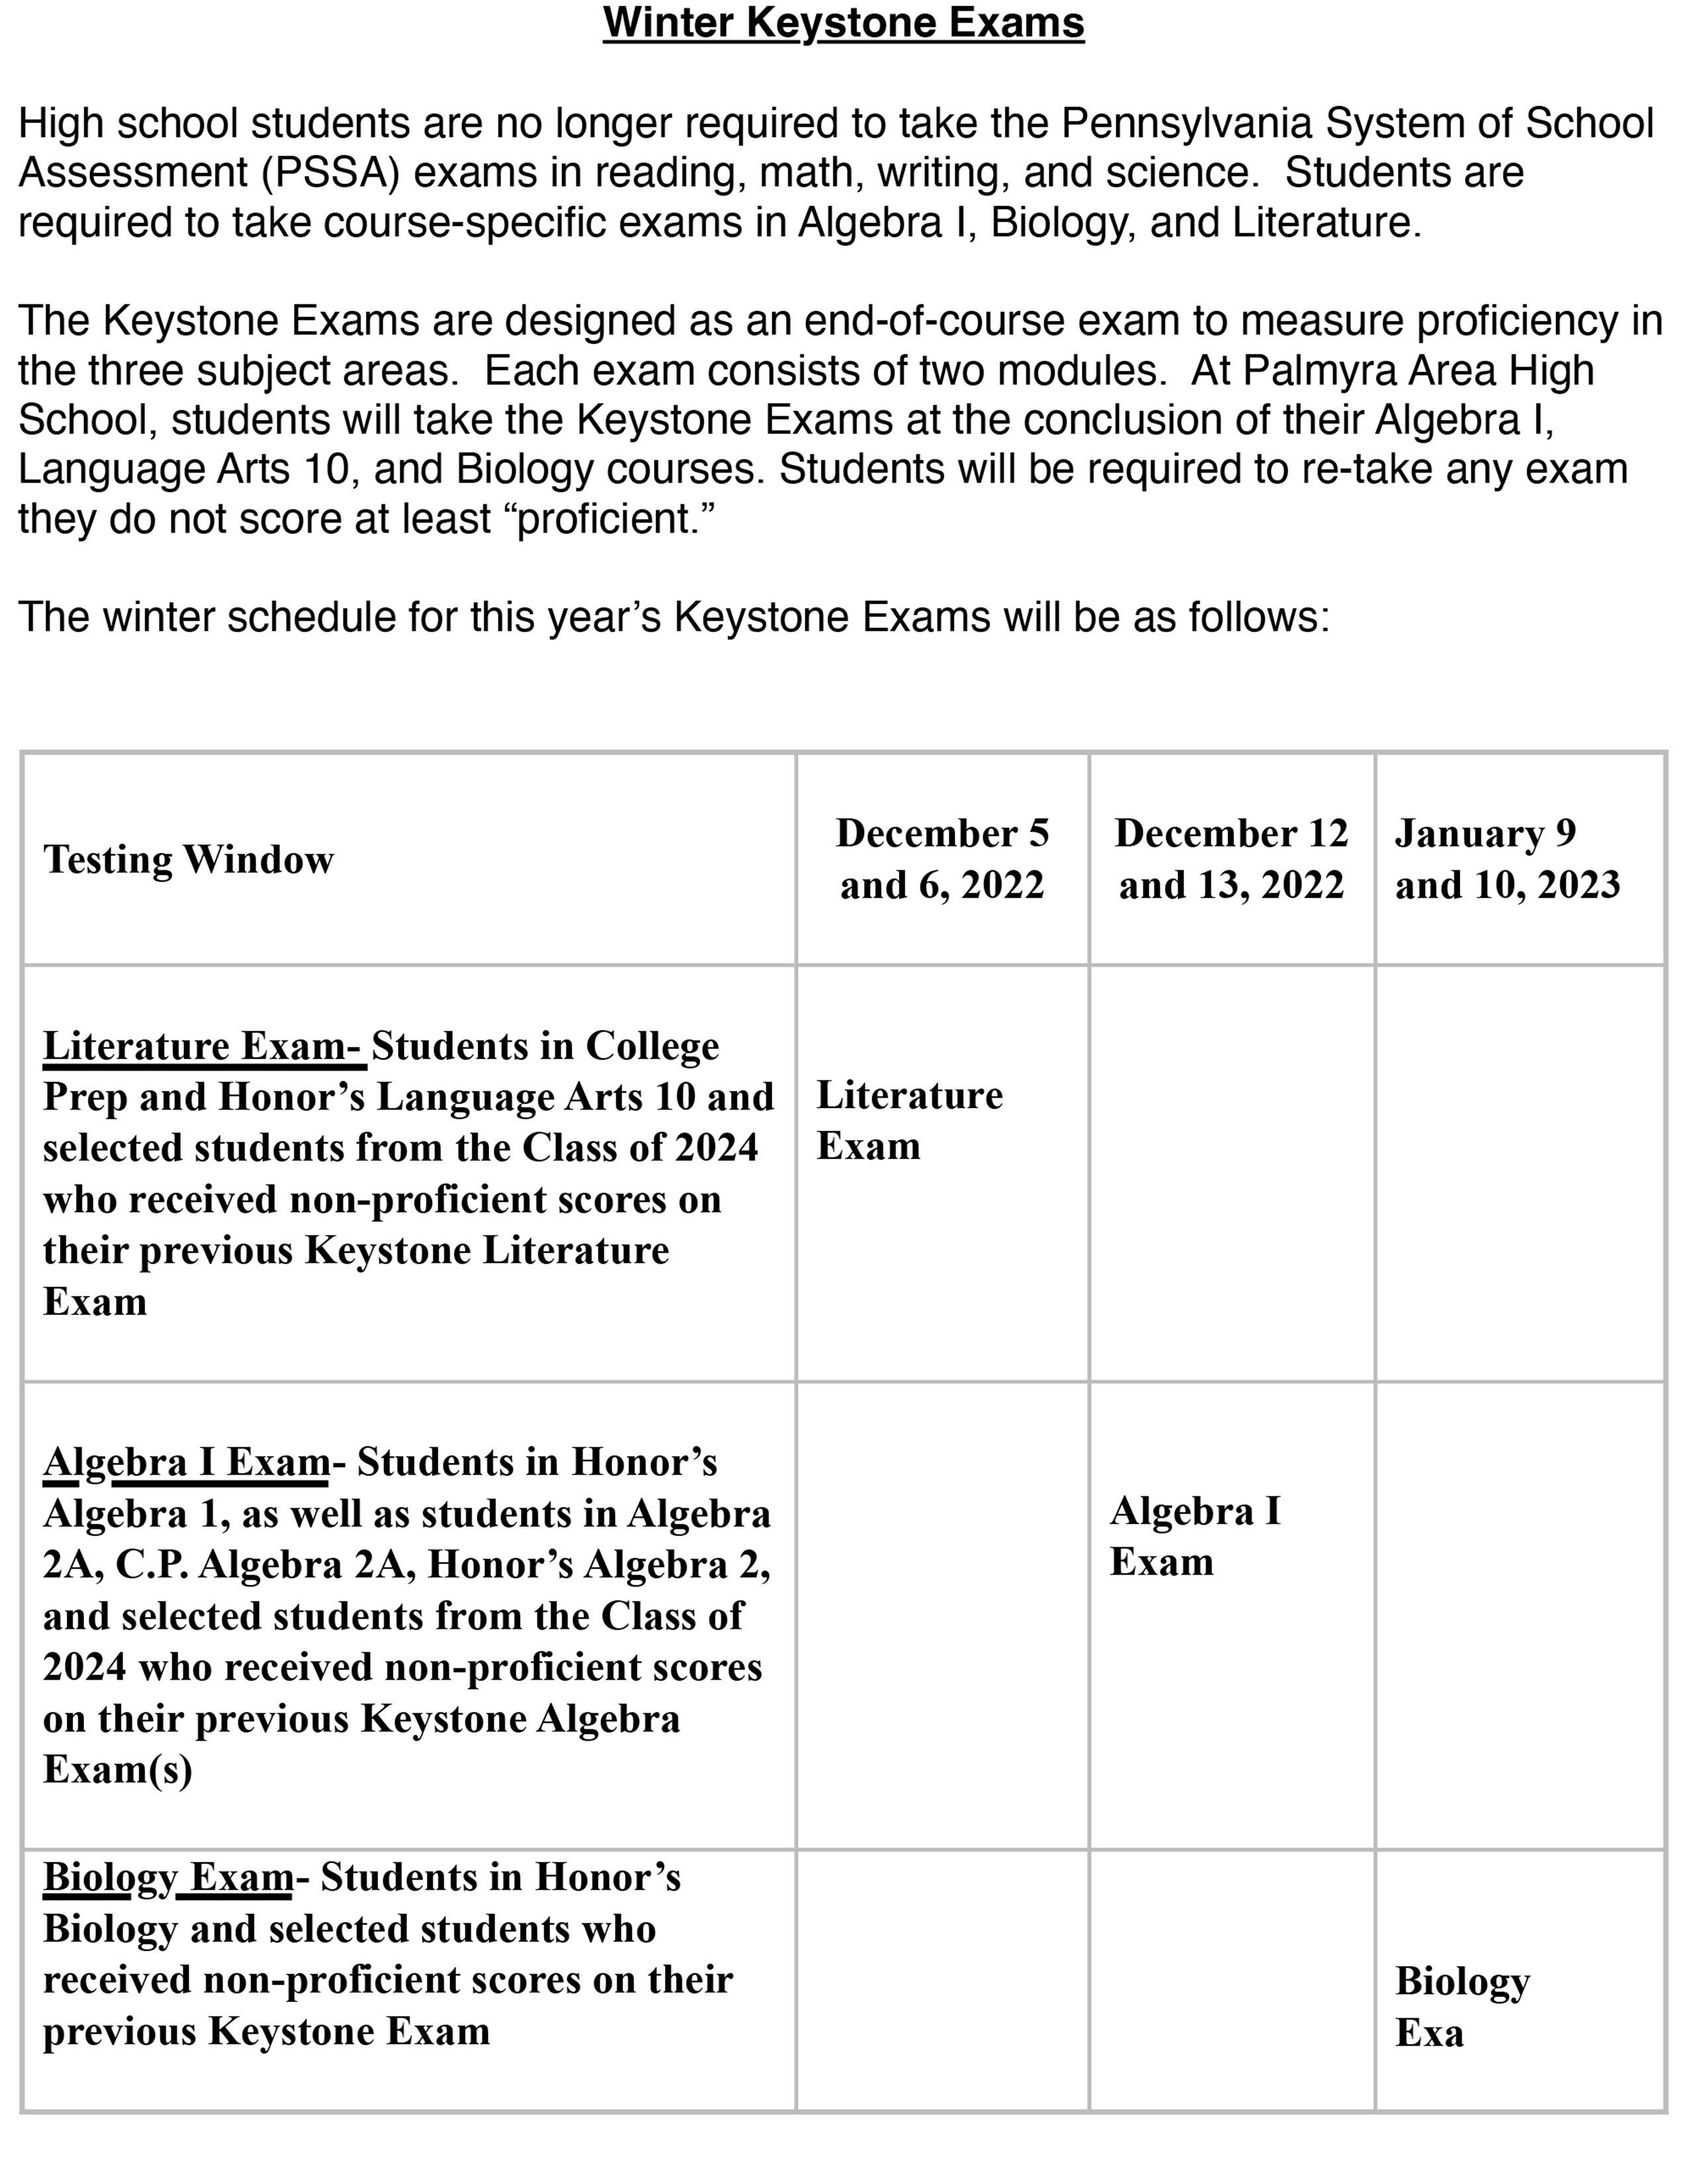 2022-2023_Winter_Keystone_Exams.png